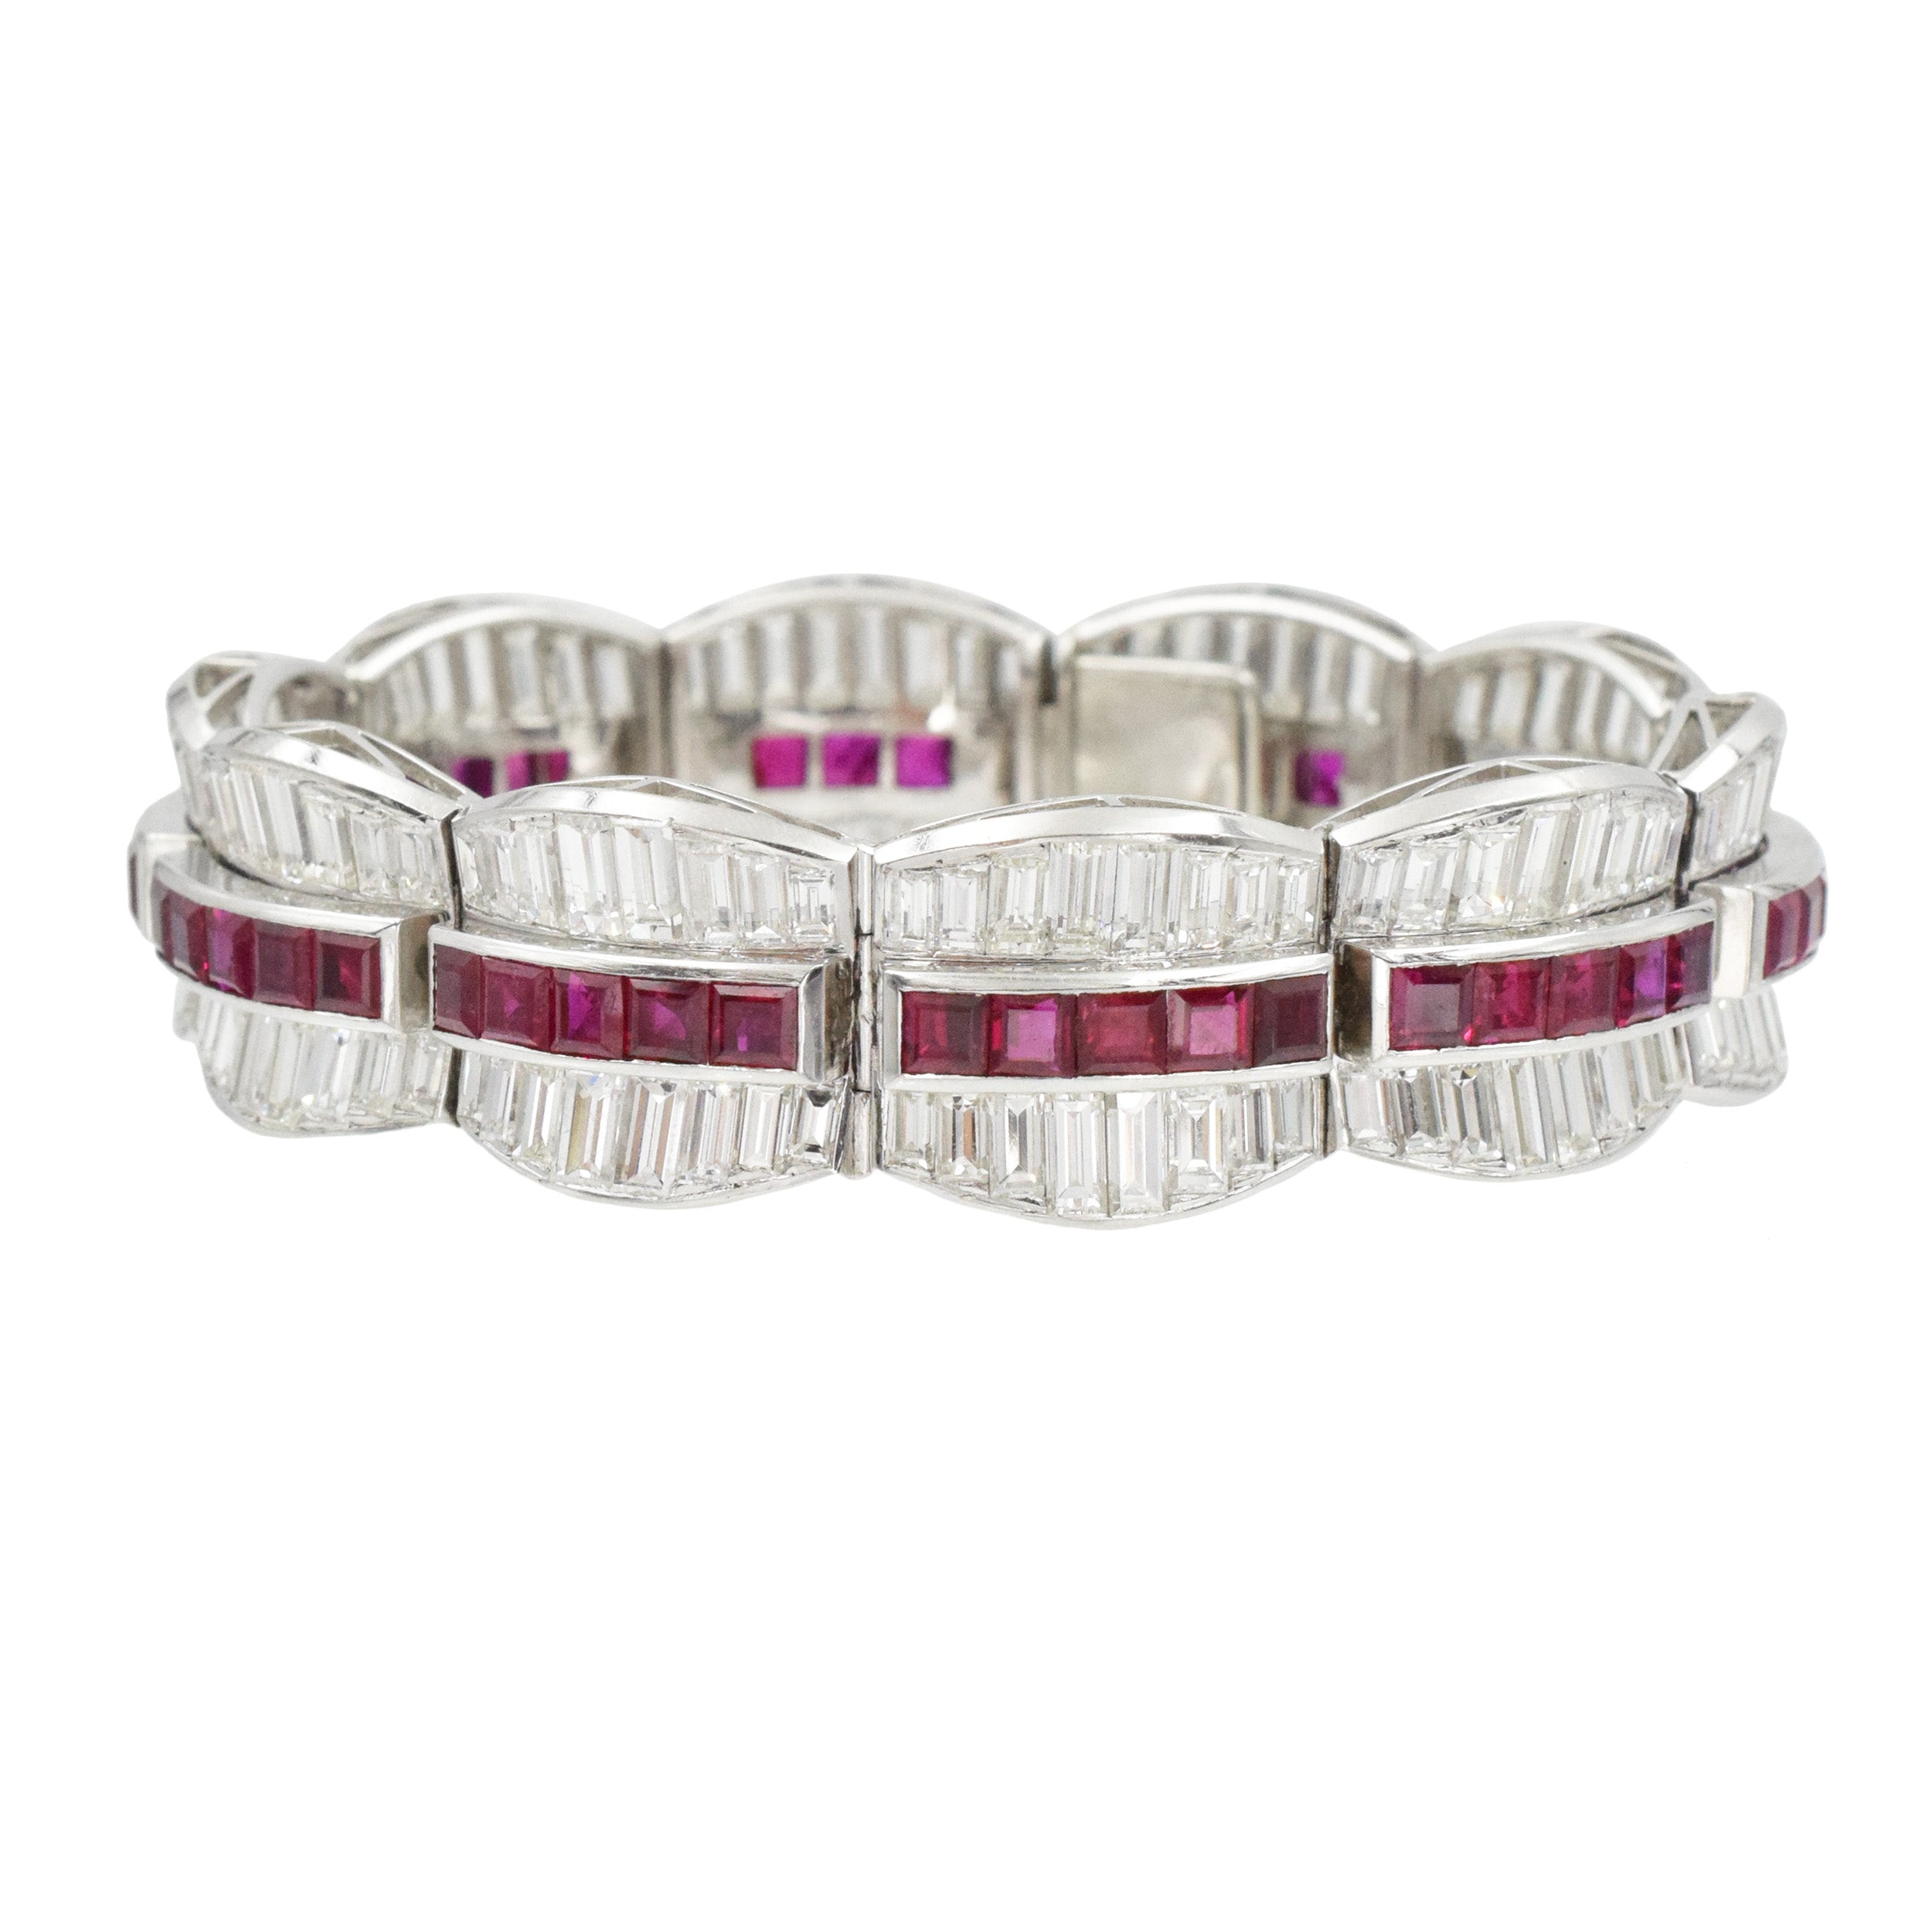 Ruby and Diamond Bracelet bracelet in platinum.